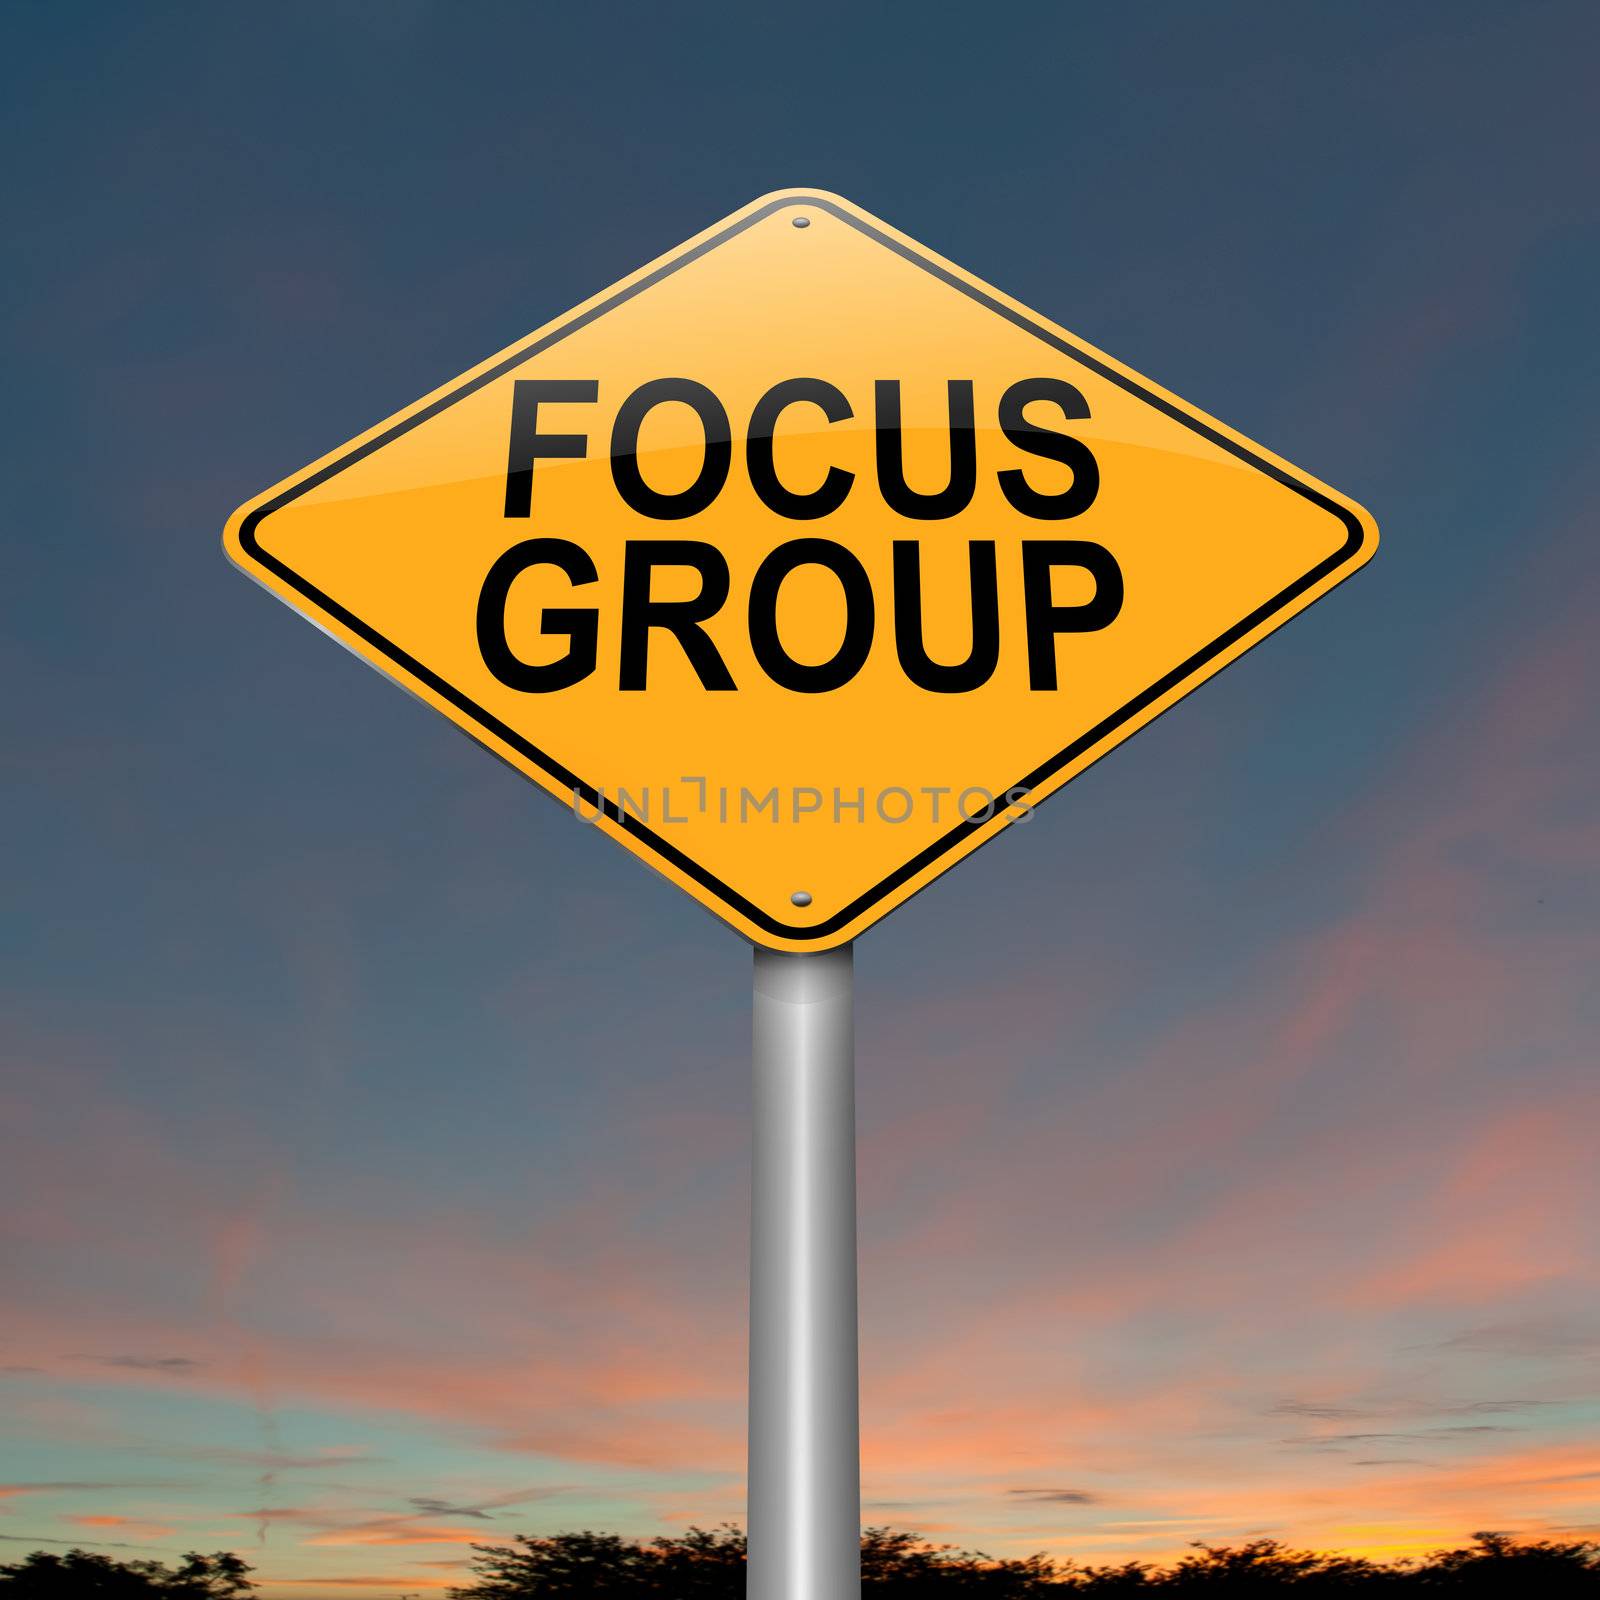 Focus group concept. by 72soul